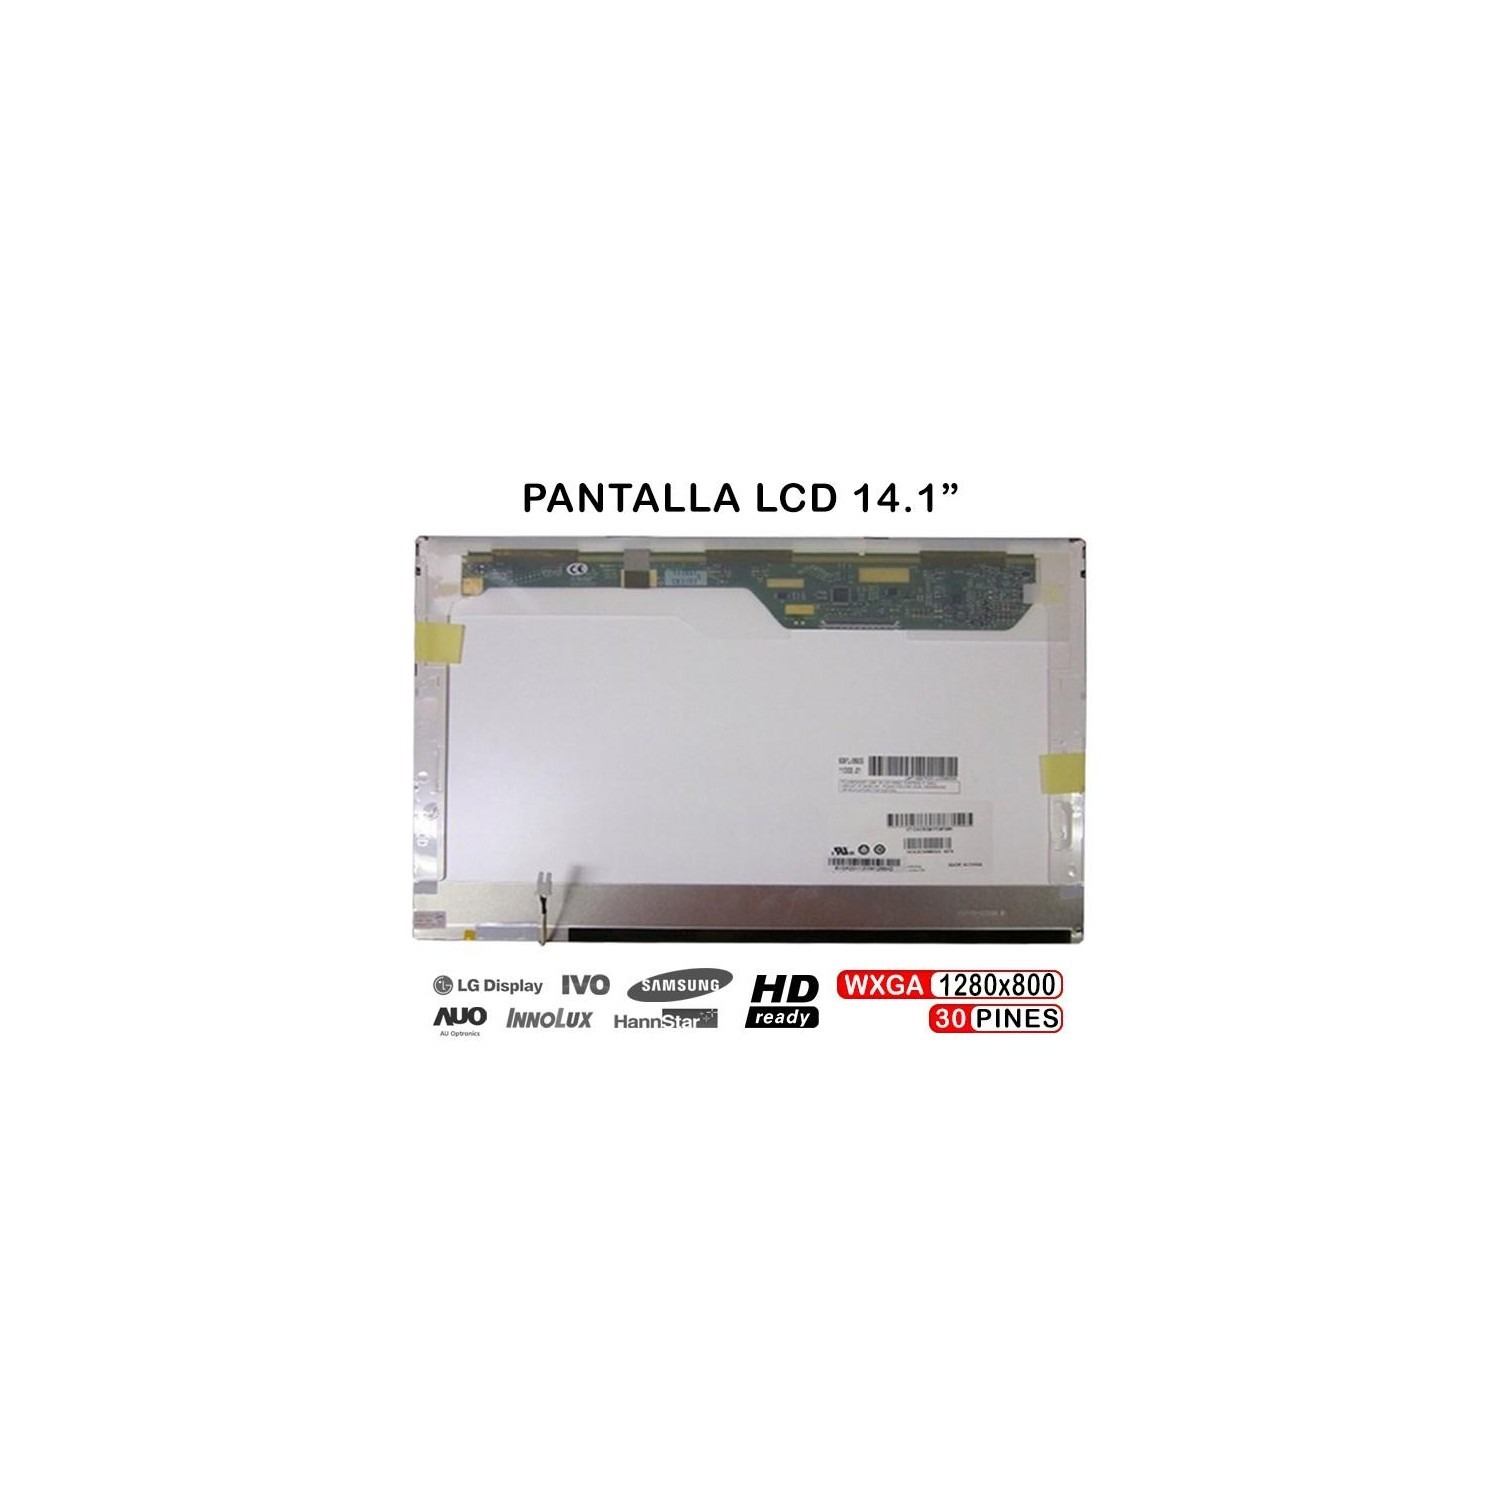 PANTALLA PARA PORTÁTIL LCD DE 14.1" LTN141W3 30 PINES